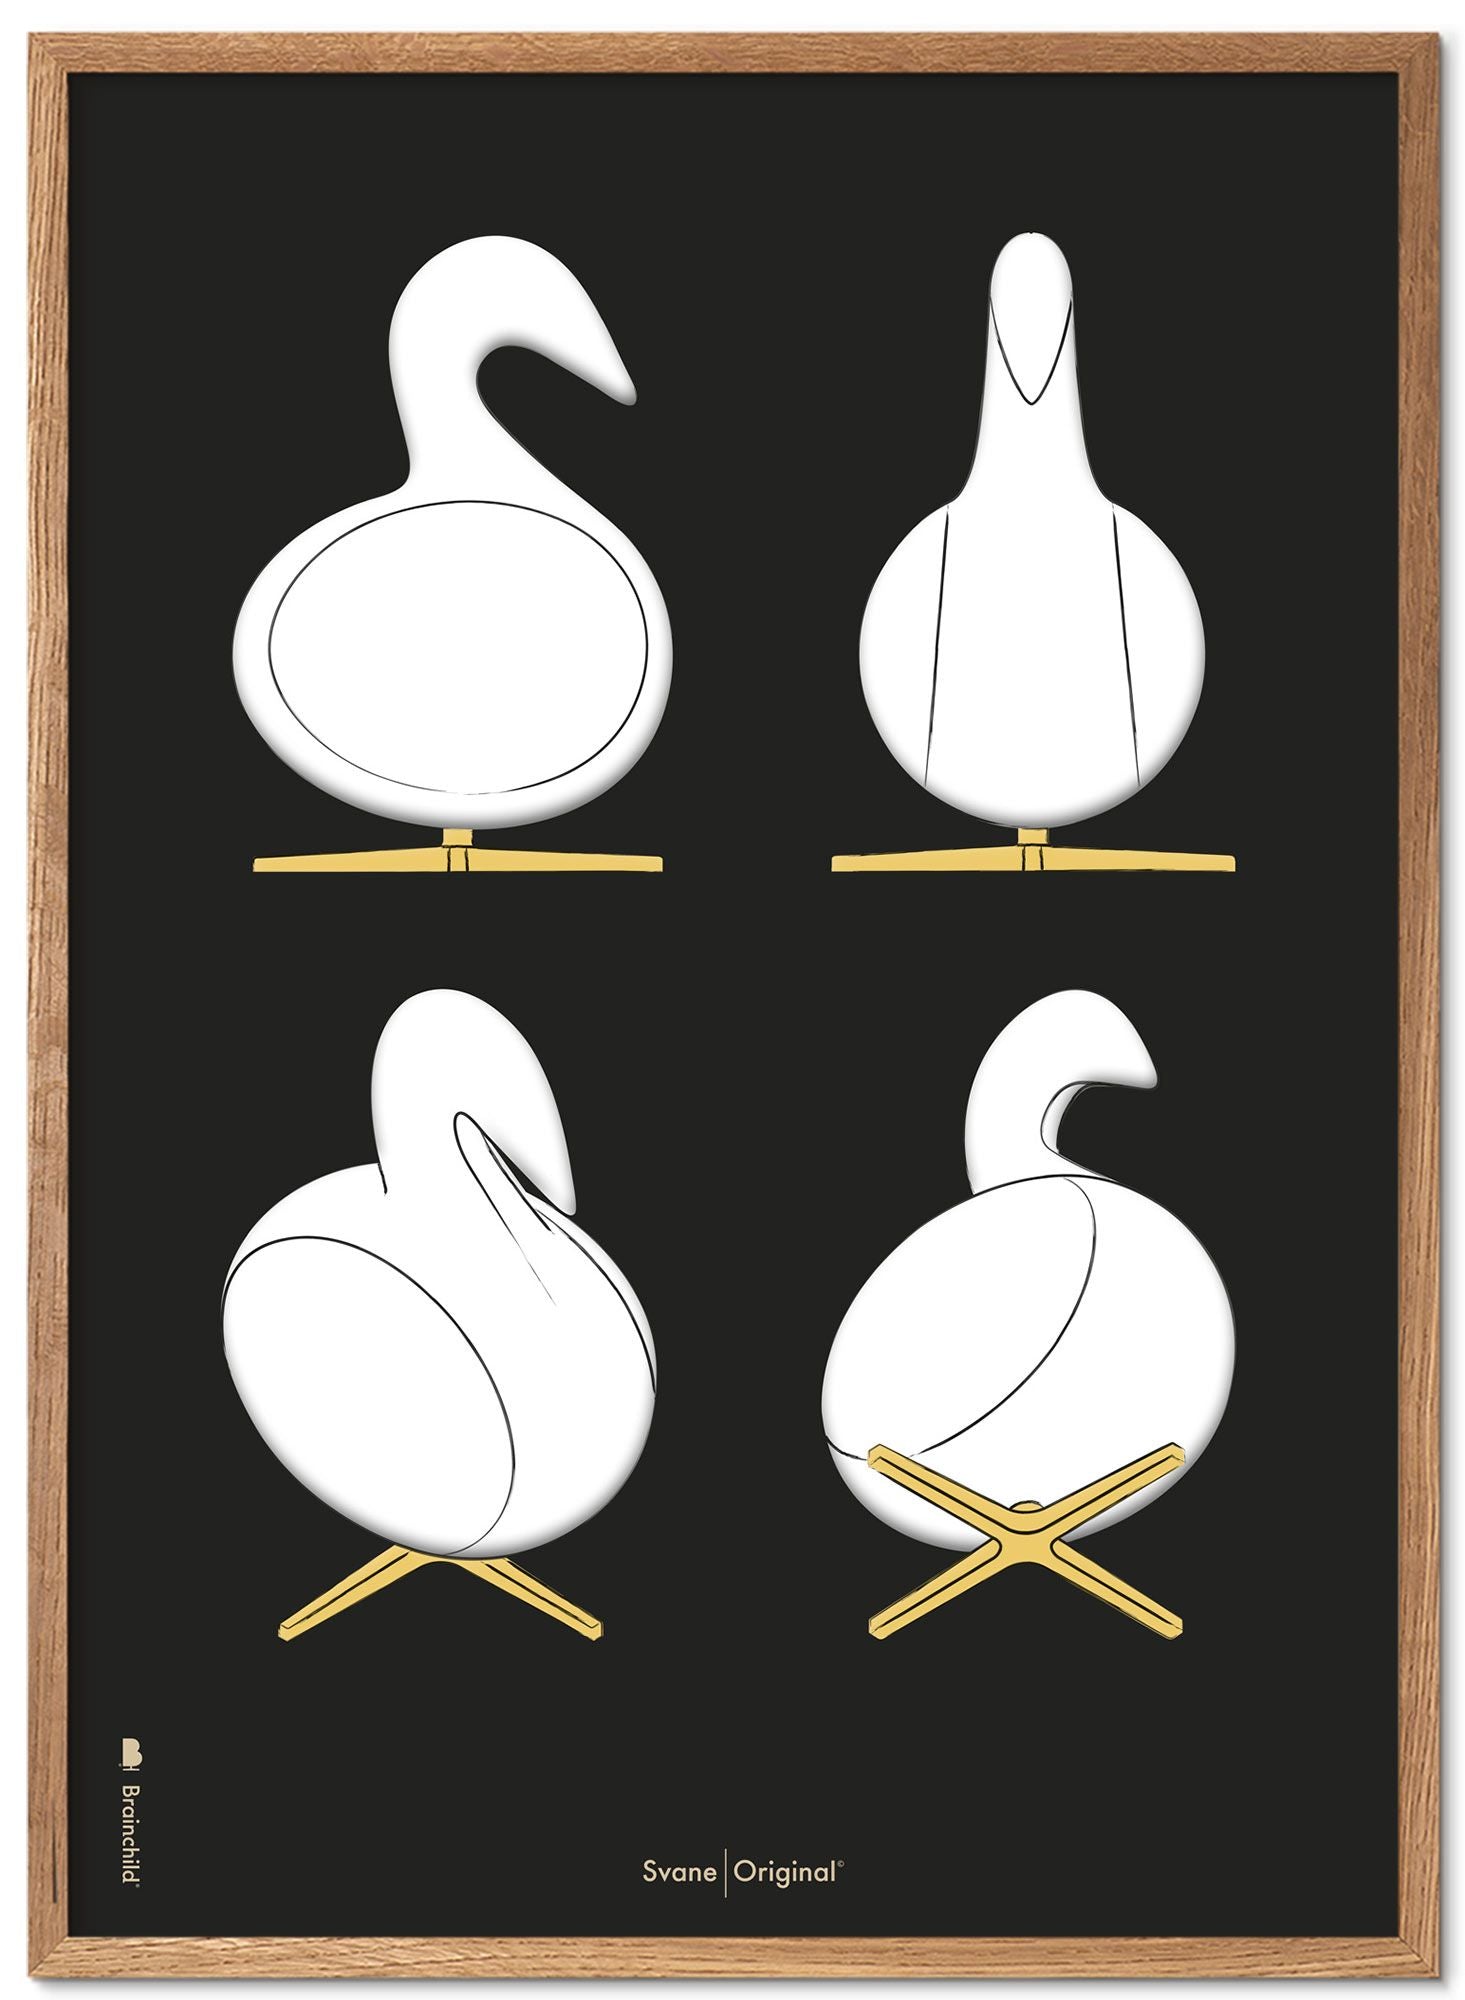 Brainchild Swan Design Sketches Poster Frame Made Of Light Wood 70x100 Cm, Black Background